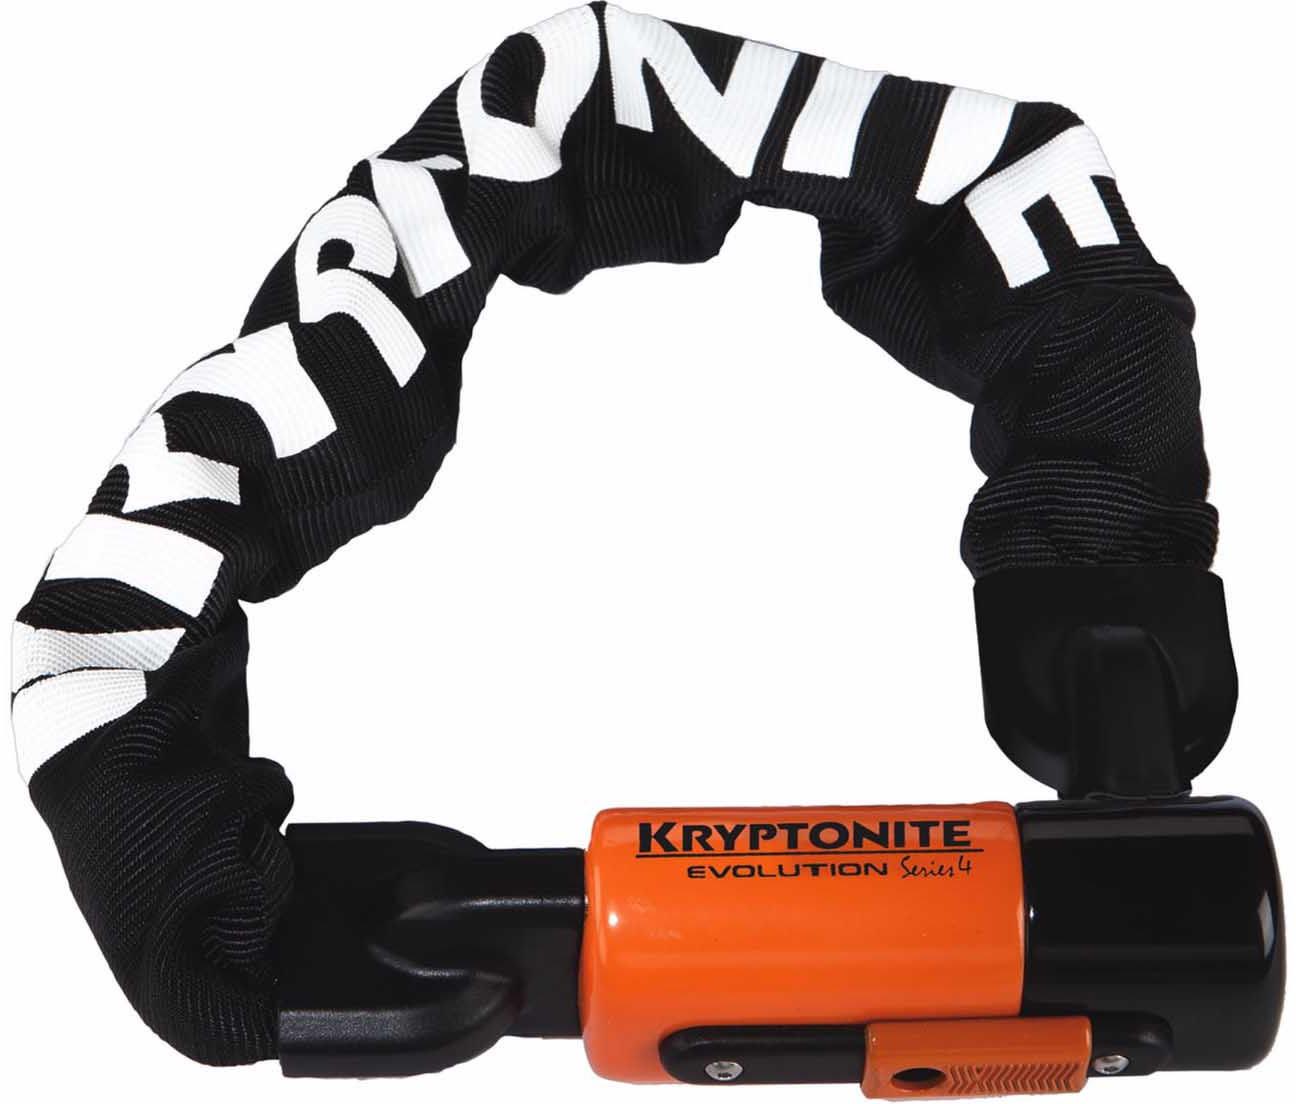 Kryptonite Evolution Series 4 1055 Chain Lock - Black/orange